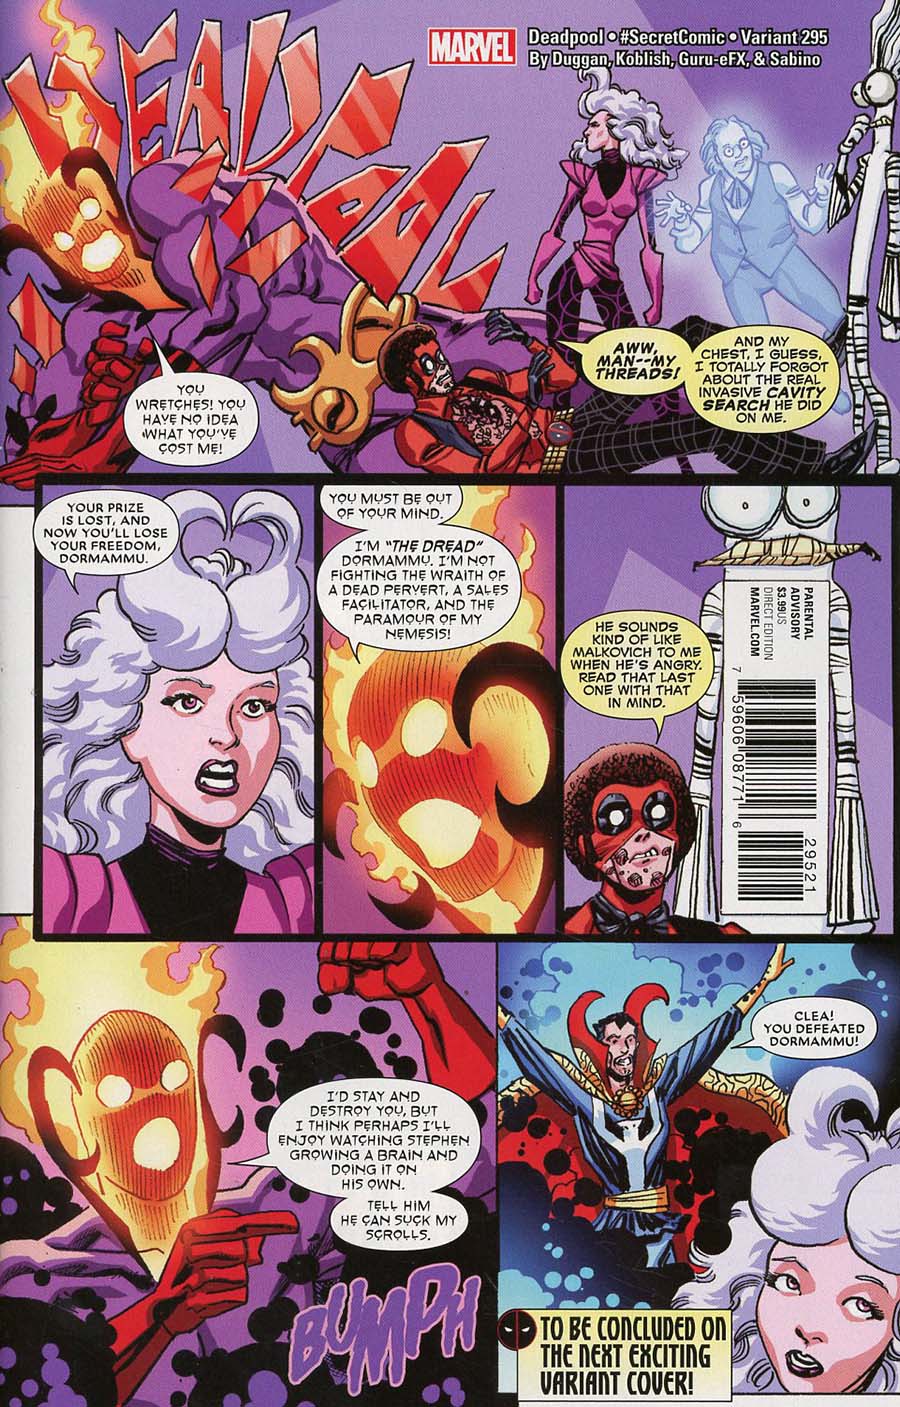 Despicable Deadpool #295 Cover B Variant Scott Koblish Secret Comic Cover (Marvel Legacy Tie-In)